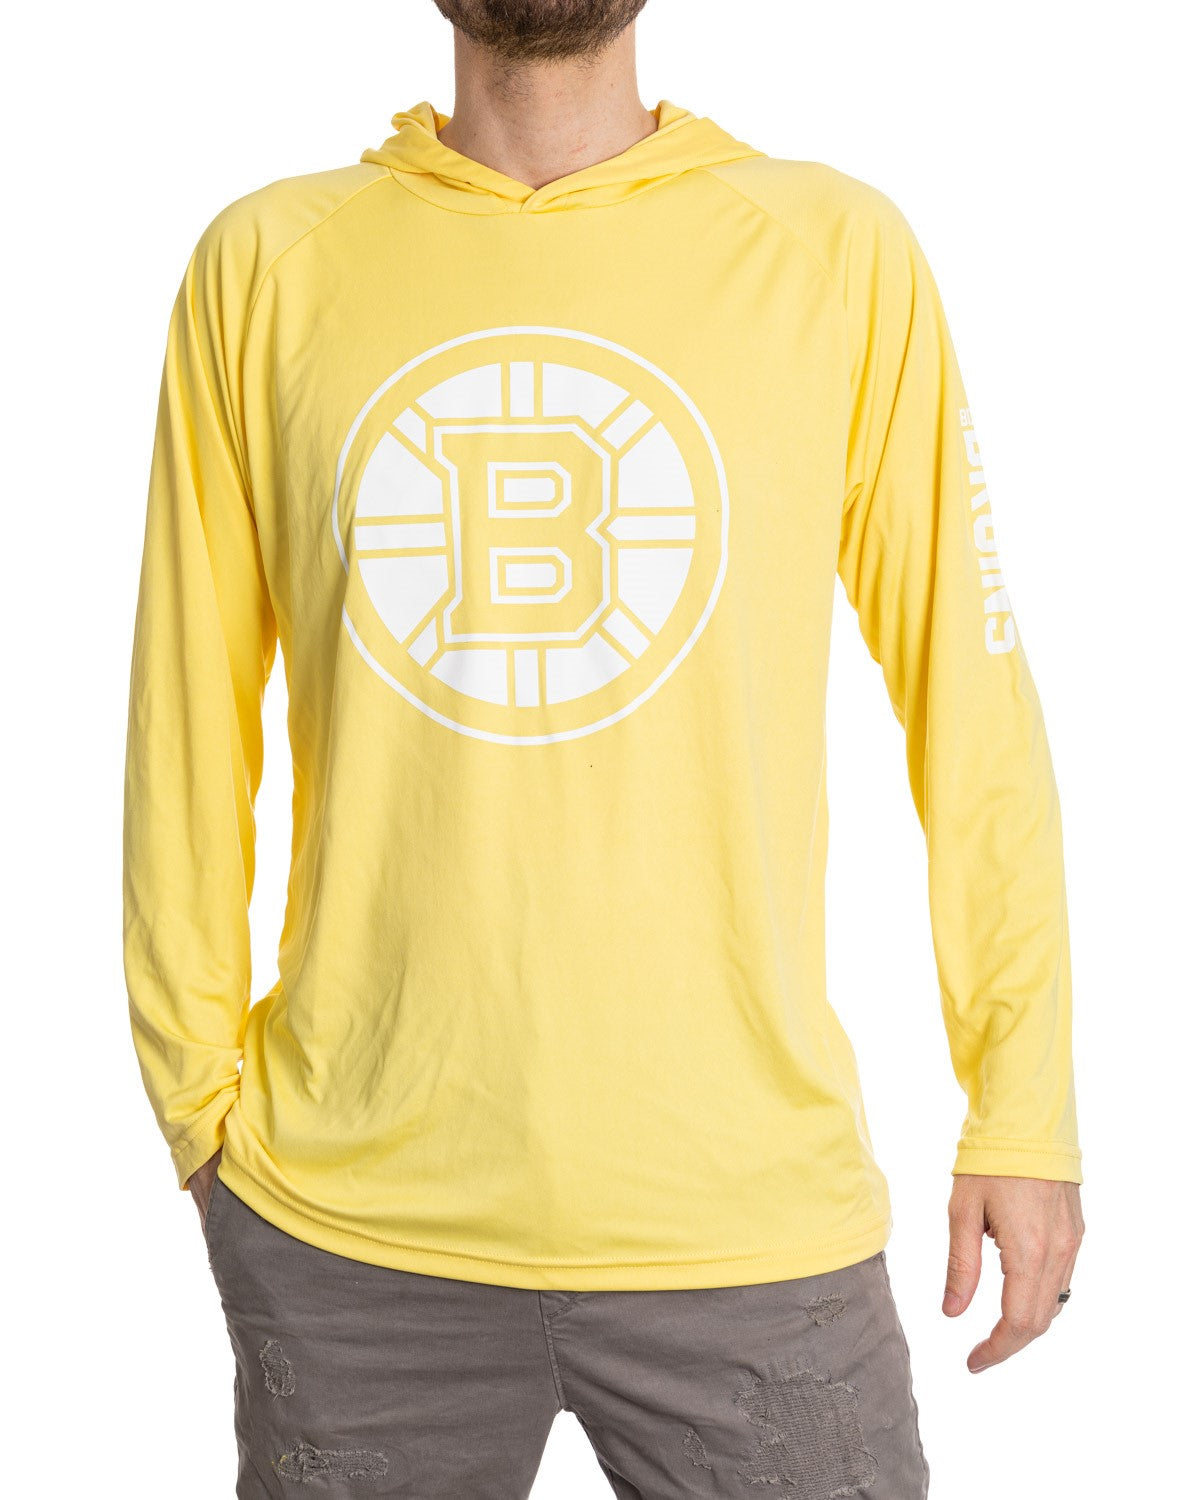 Boston Bruins Hooded Rashguard with UV Protection